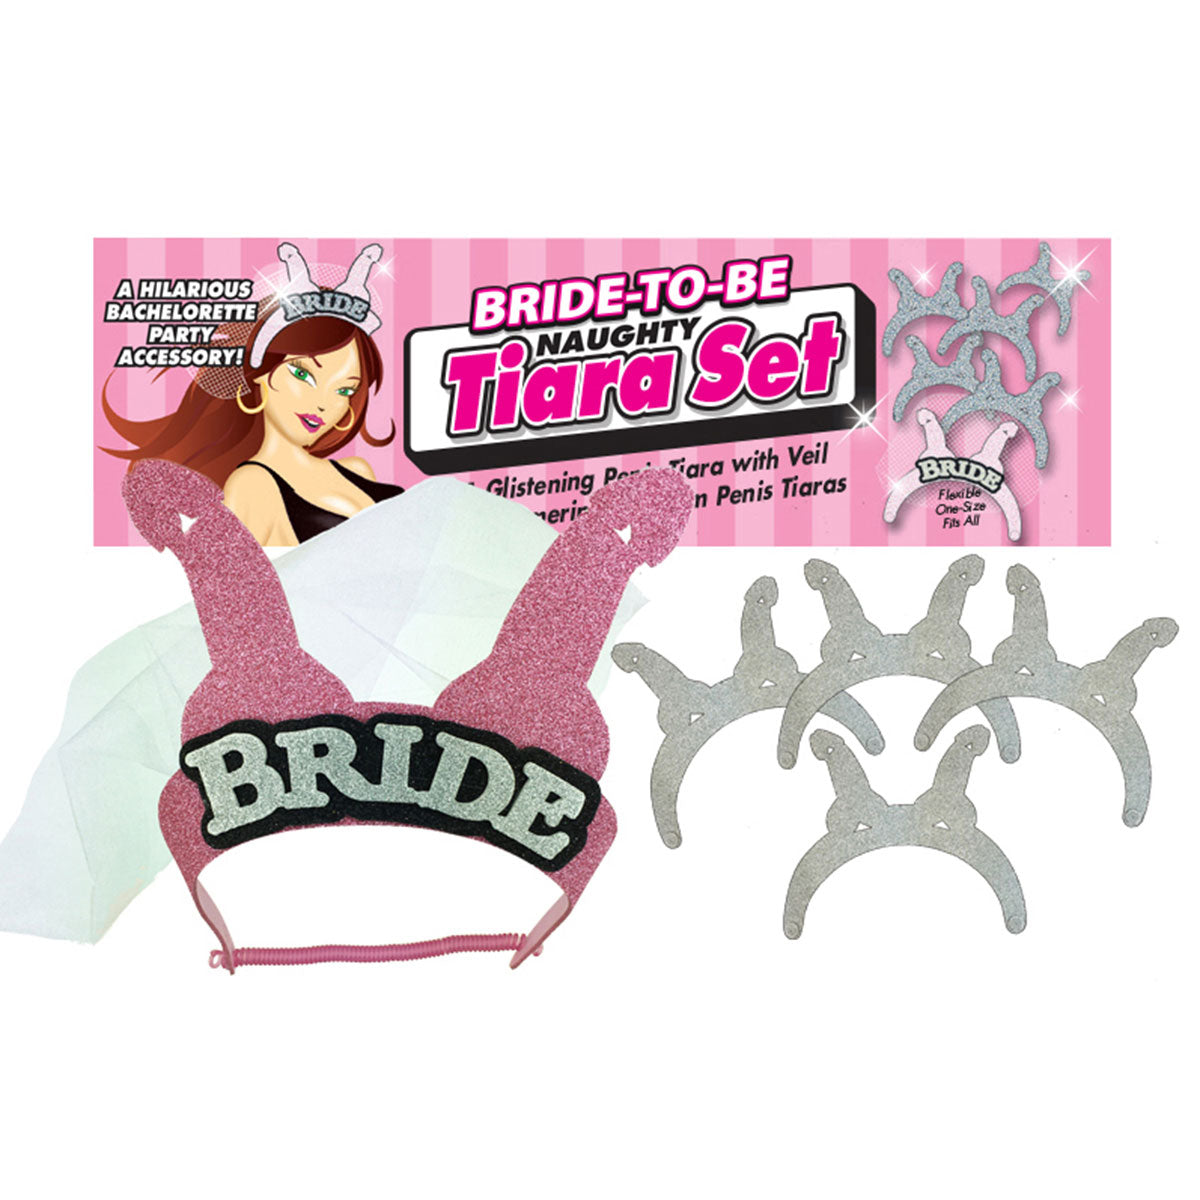 Little Genie Bride-to-Be Naughty Penis Tiara 5 pc Set 